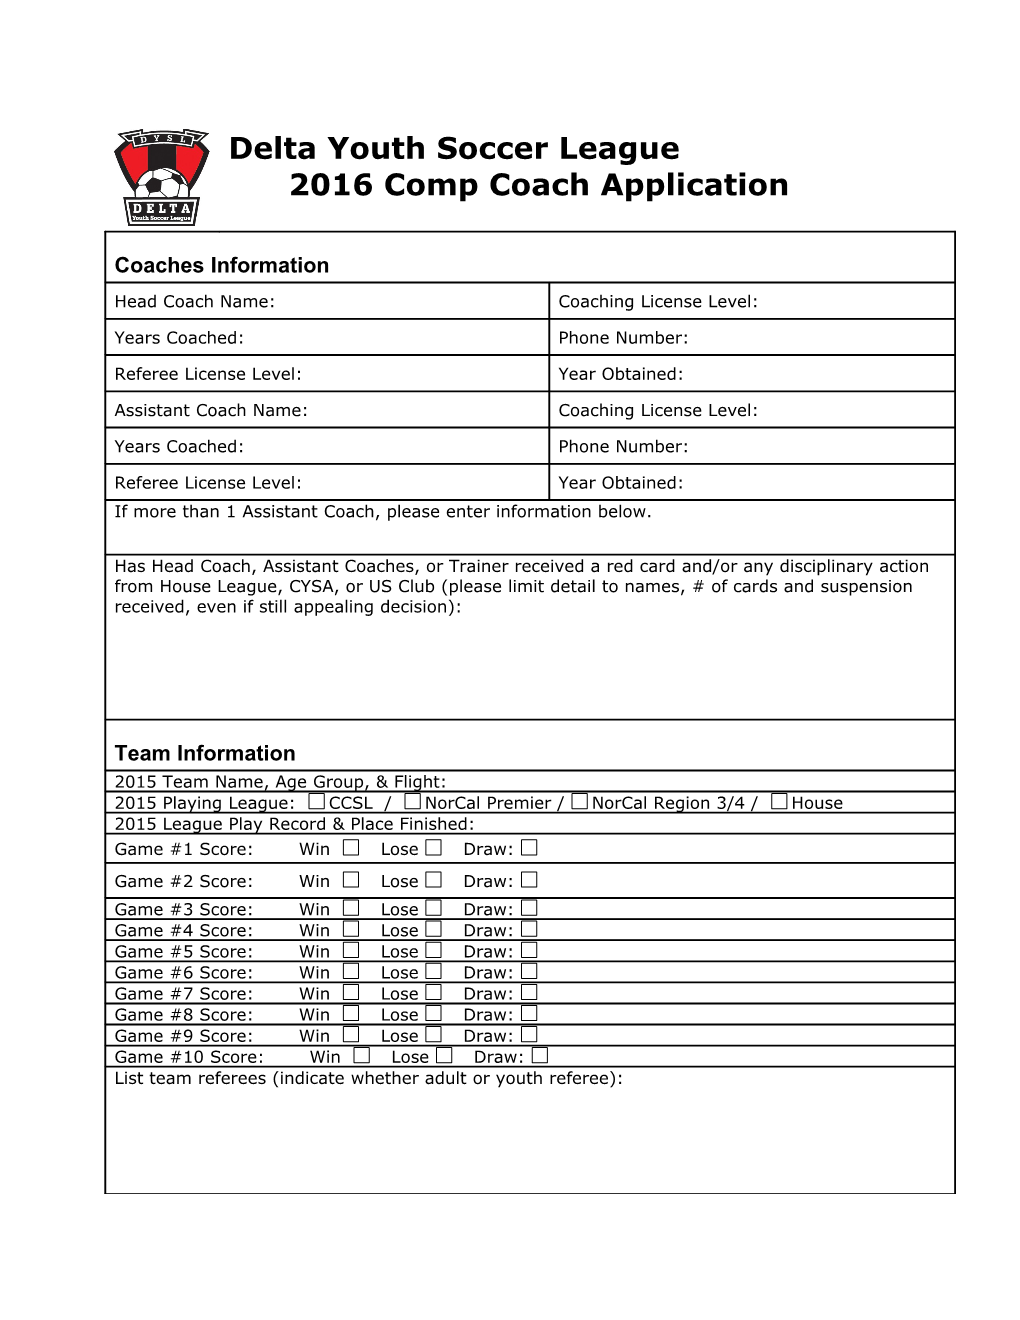 Delta Youth Soccer League2016comp Coach Application